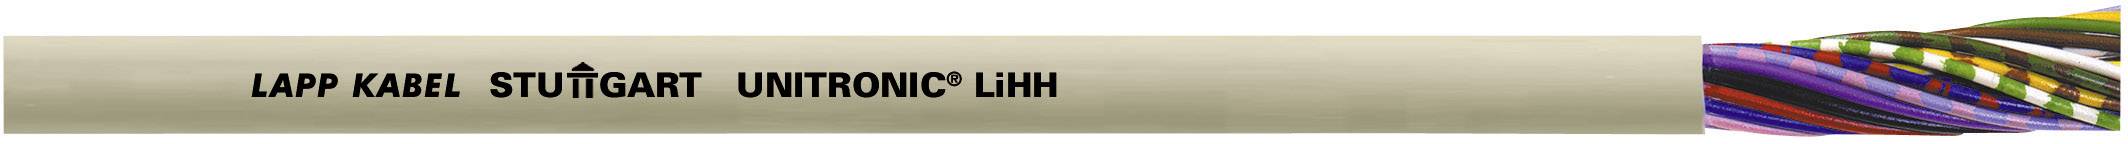 LAPP 37142-1 Datenleitung UNITRONIC LiHH 4 x 0.34 mm² Kieselgrau (RAL 7032) Meterware